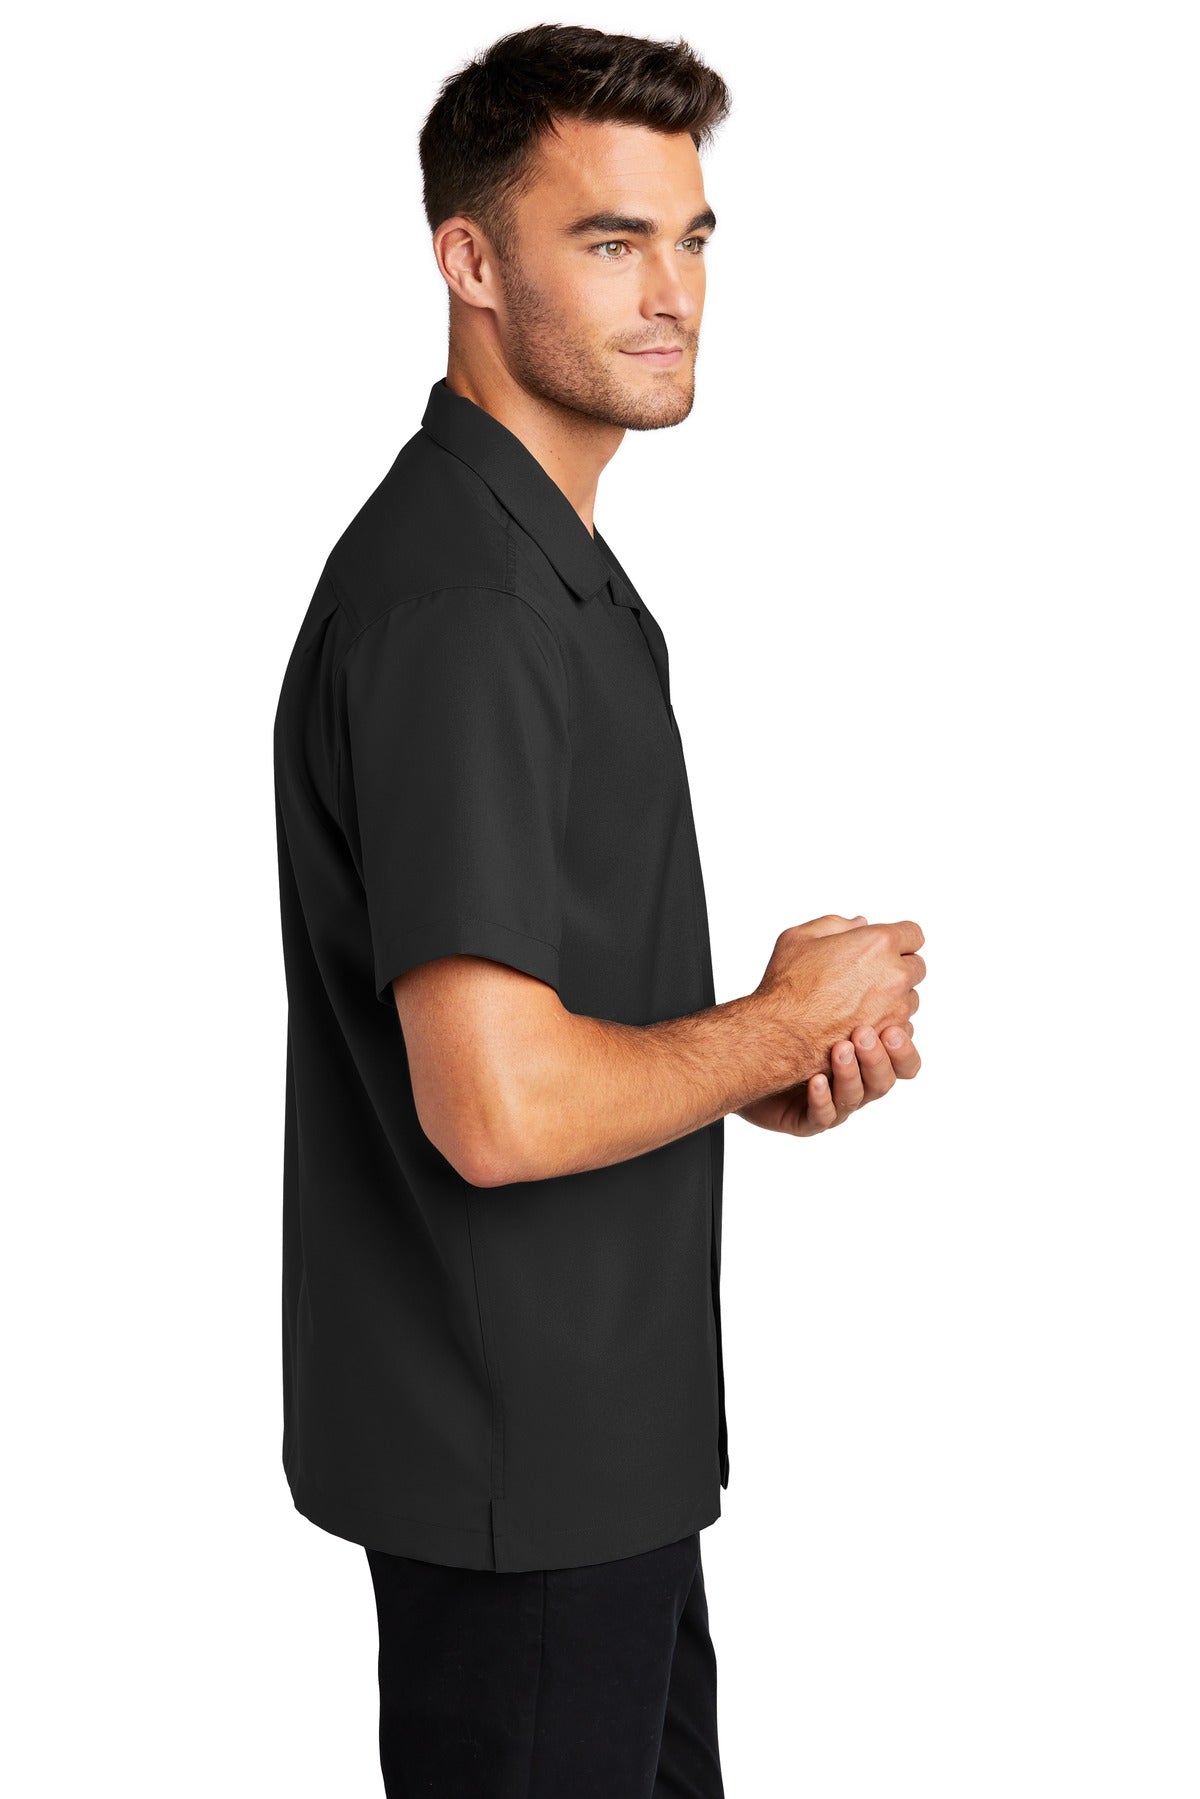 Port Authority ® Short Sleeve Performance Staff Shirt W400